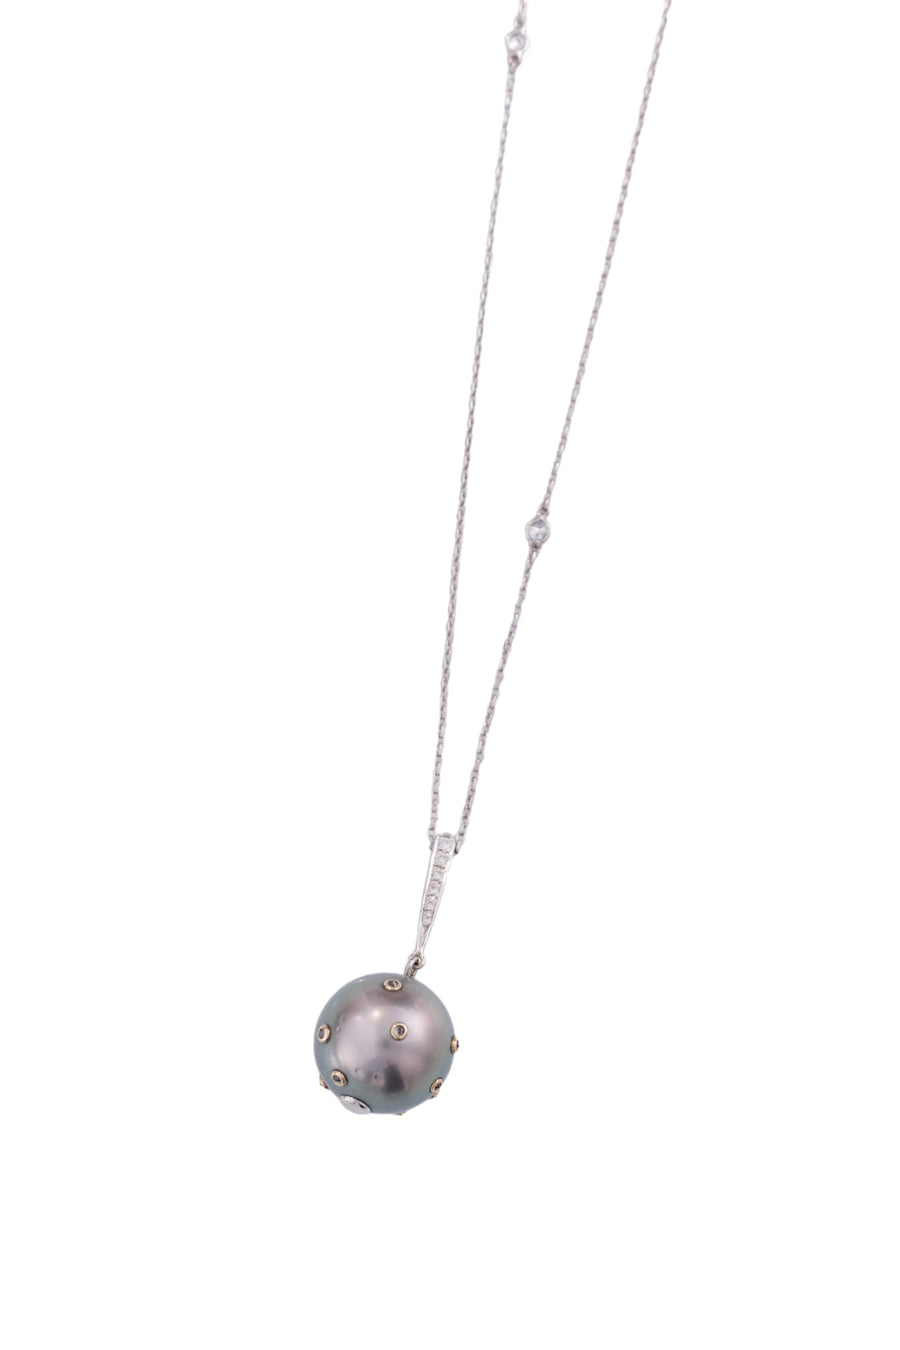 Black Pearl & Diamond constellation Necklace